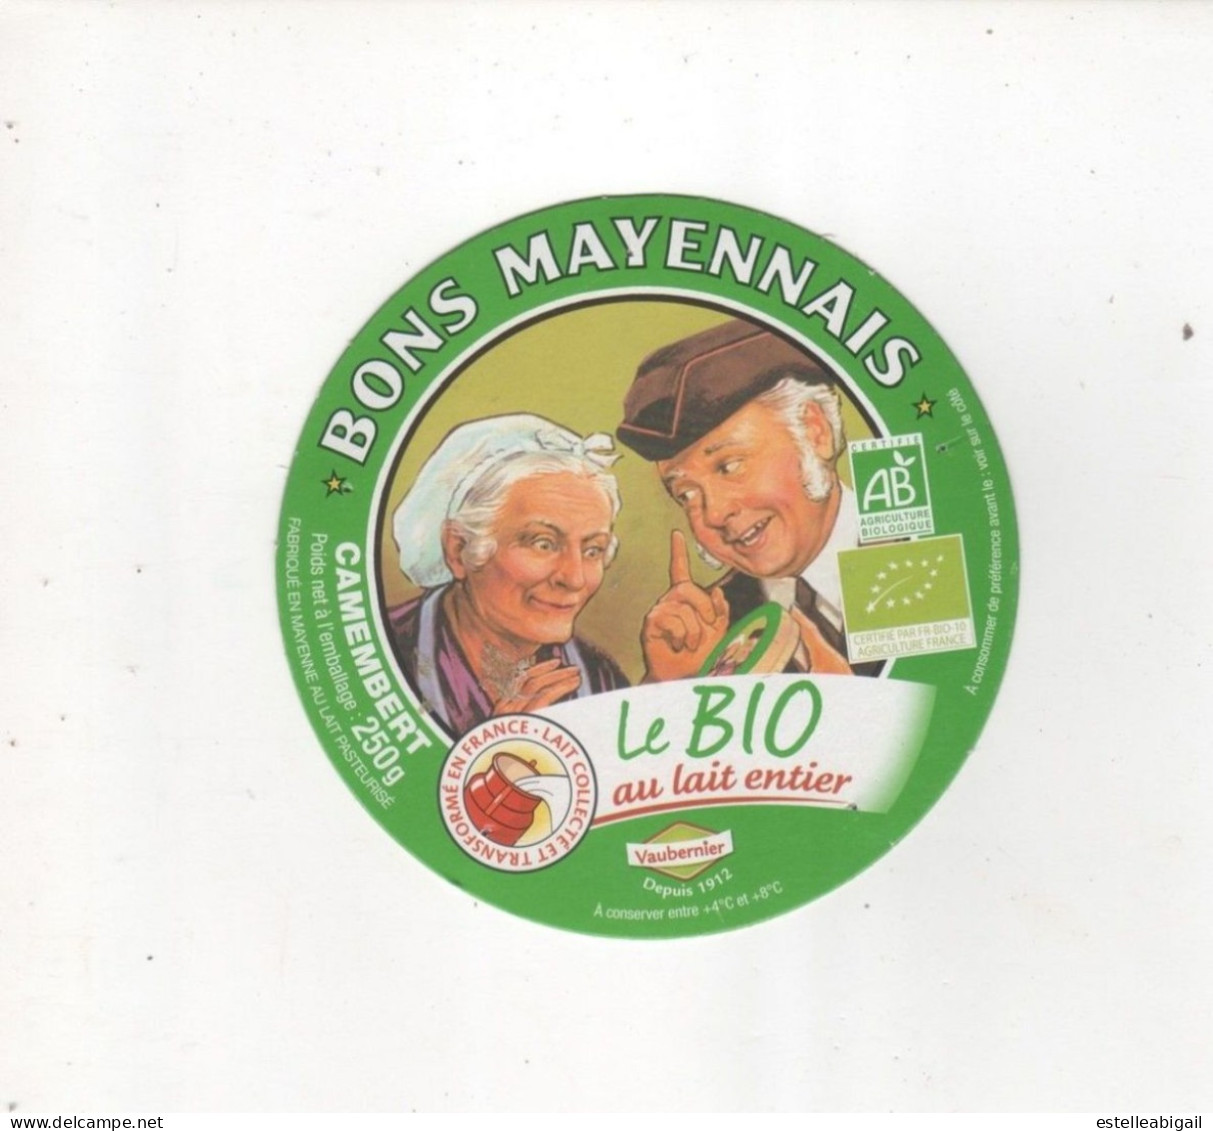 Bons Mayennais Le Bio - Cheese